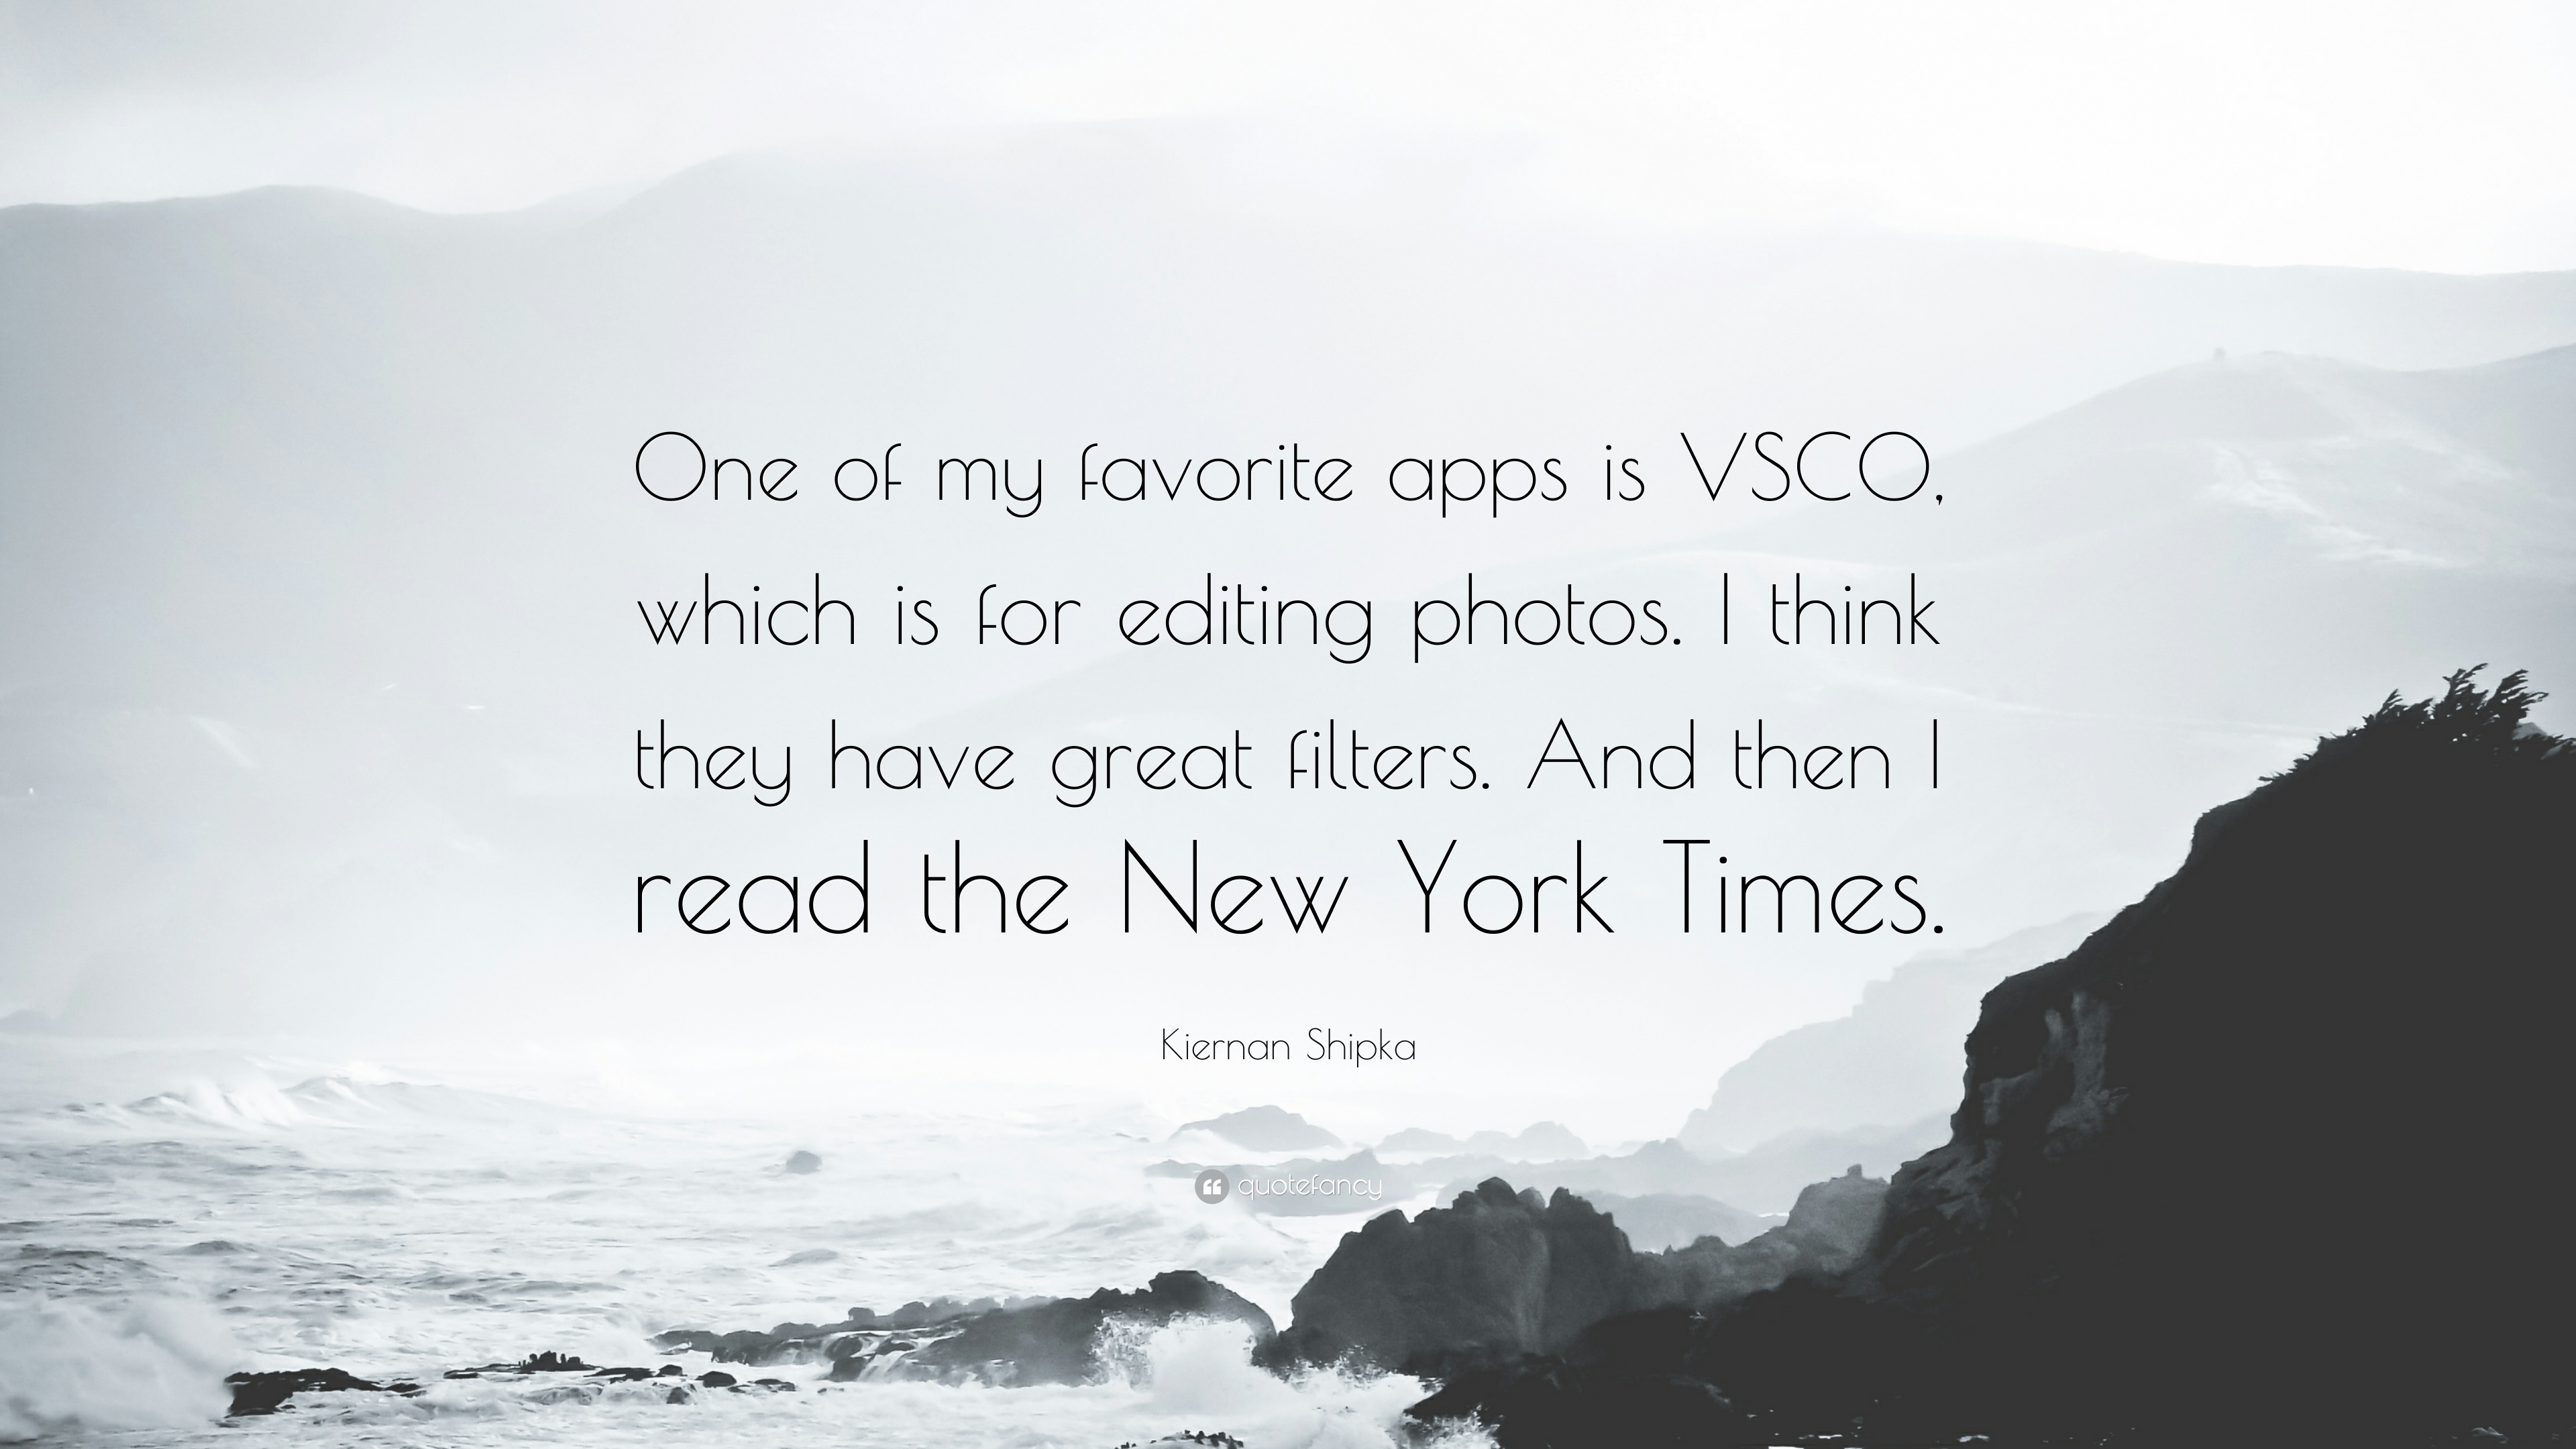 Kiernan Shipka Quote: “One of my favorite apps is VSCO, which is